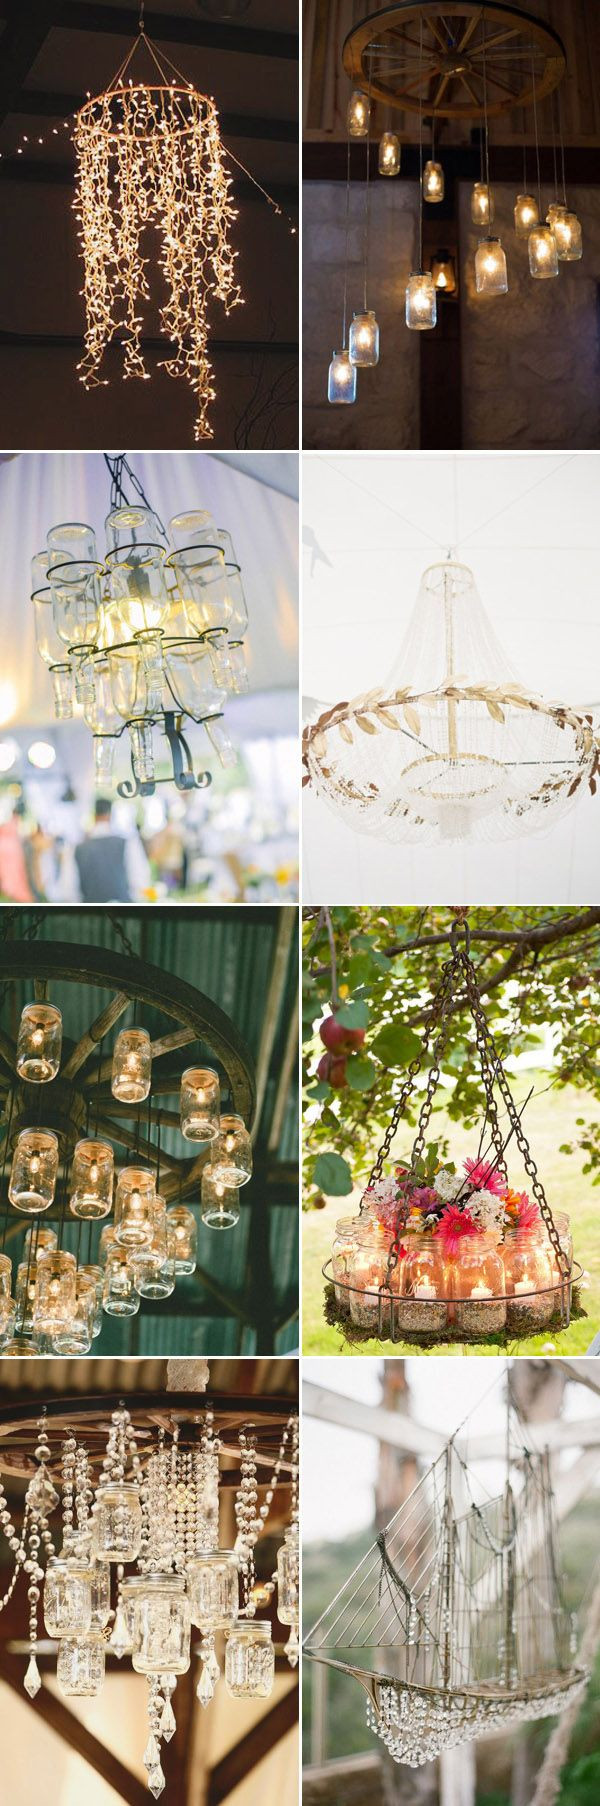 DIY Wedding Chandelier
 1000 ideas about Diy Chandelier on Pinterest